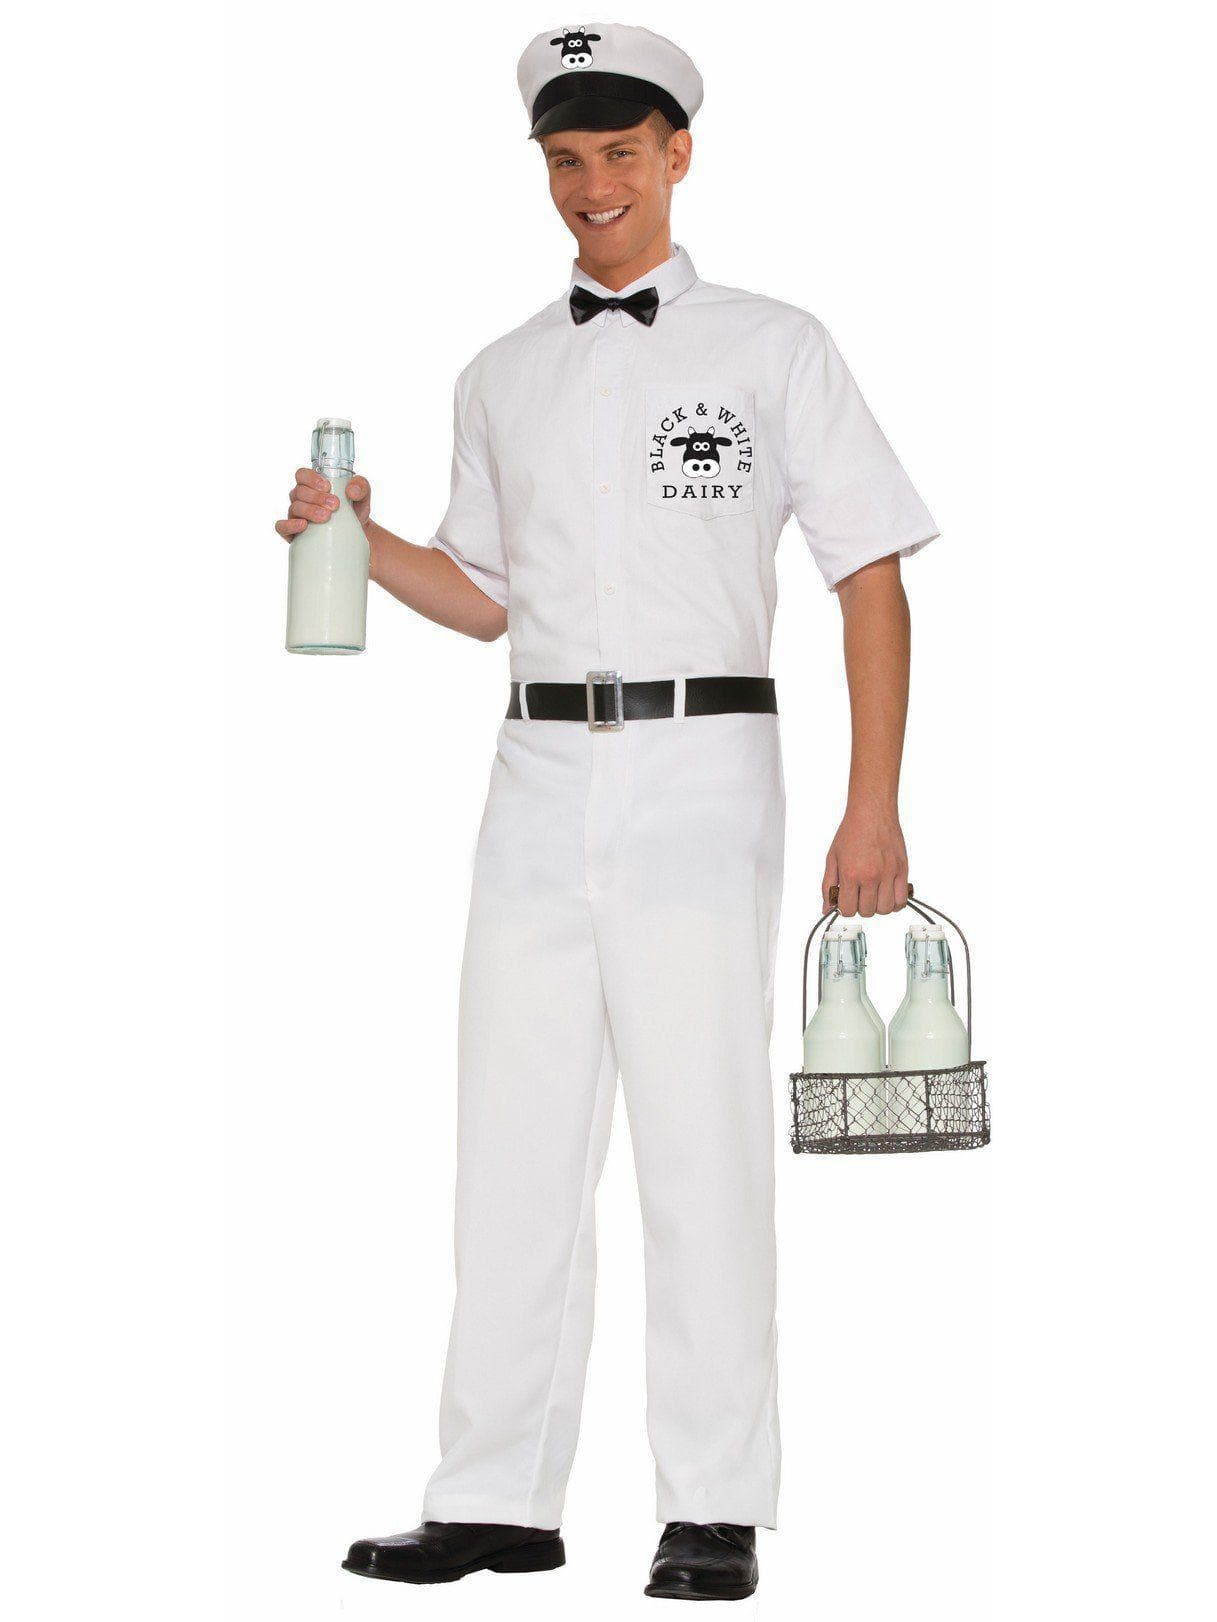 Adult Milkman Costume - costumes.com